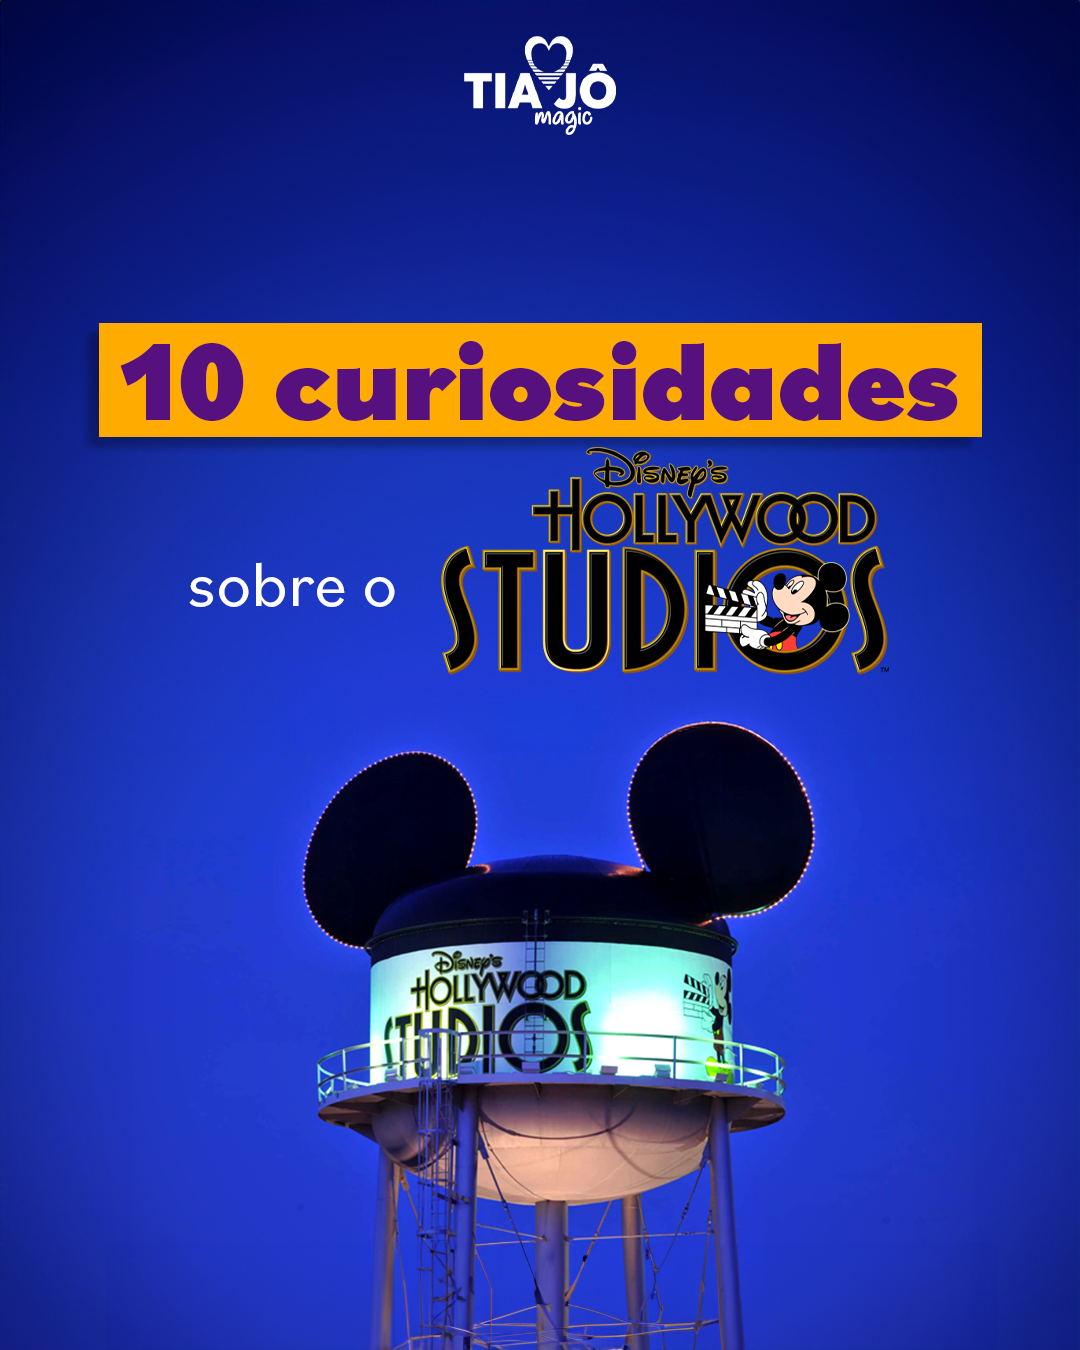 curiosidades hollywood studios